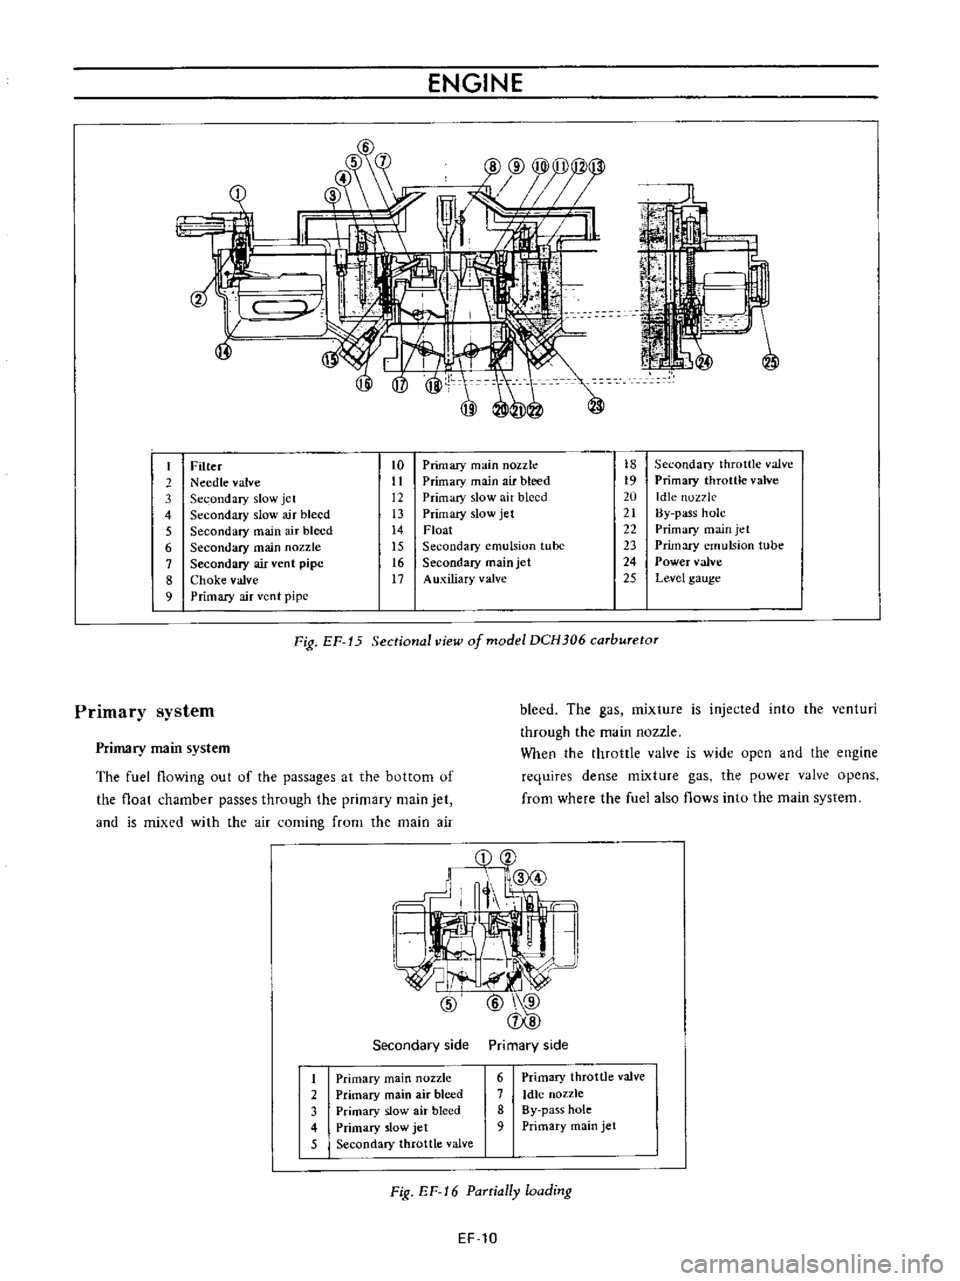 DATSUN B110 1973  Service Repair Manual 
ENGINE

6

f

I

Filter

to

Primary 
main 
nozzk 
18

Secondary 
throttle 
valve

2 
Needle 
valve 
11

Primary 
main 
air 
bleed

19

Primal 
throttle 
valve

3

Secondary 
slow

jet 
12

Primary 
